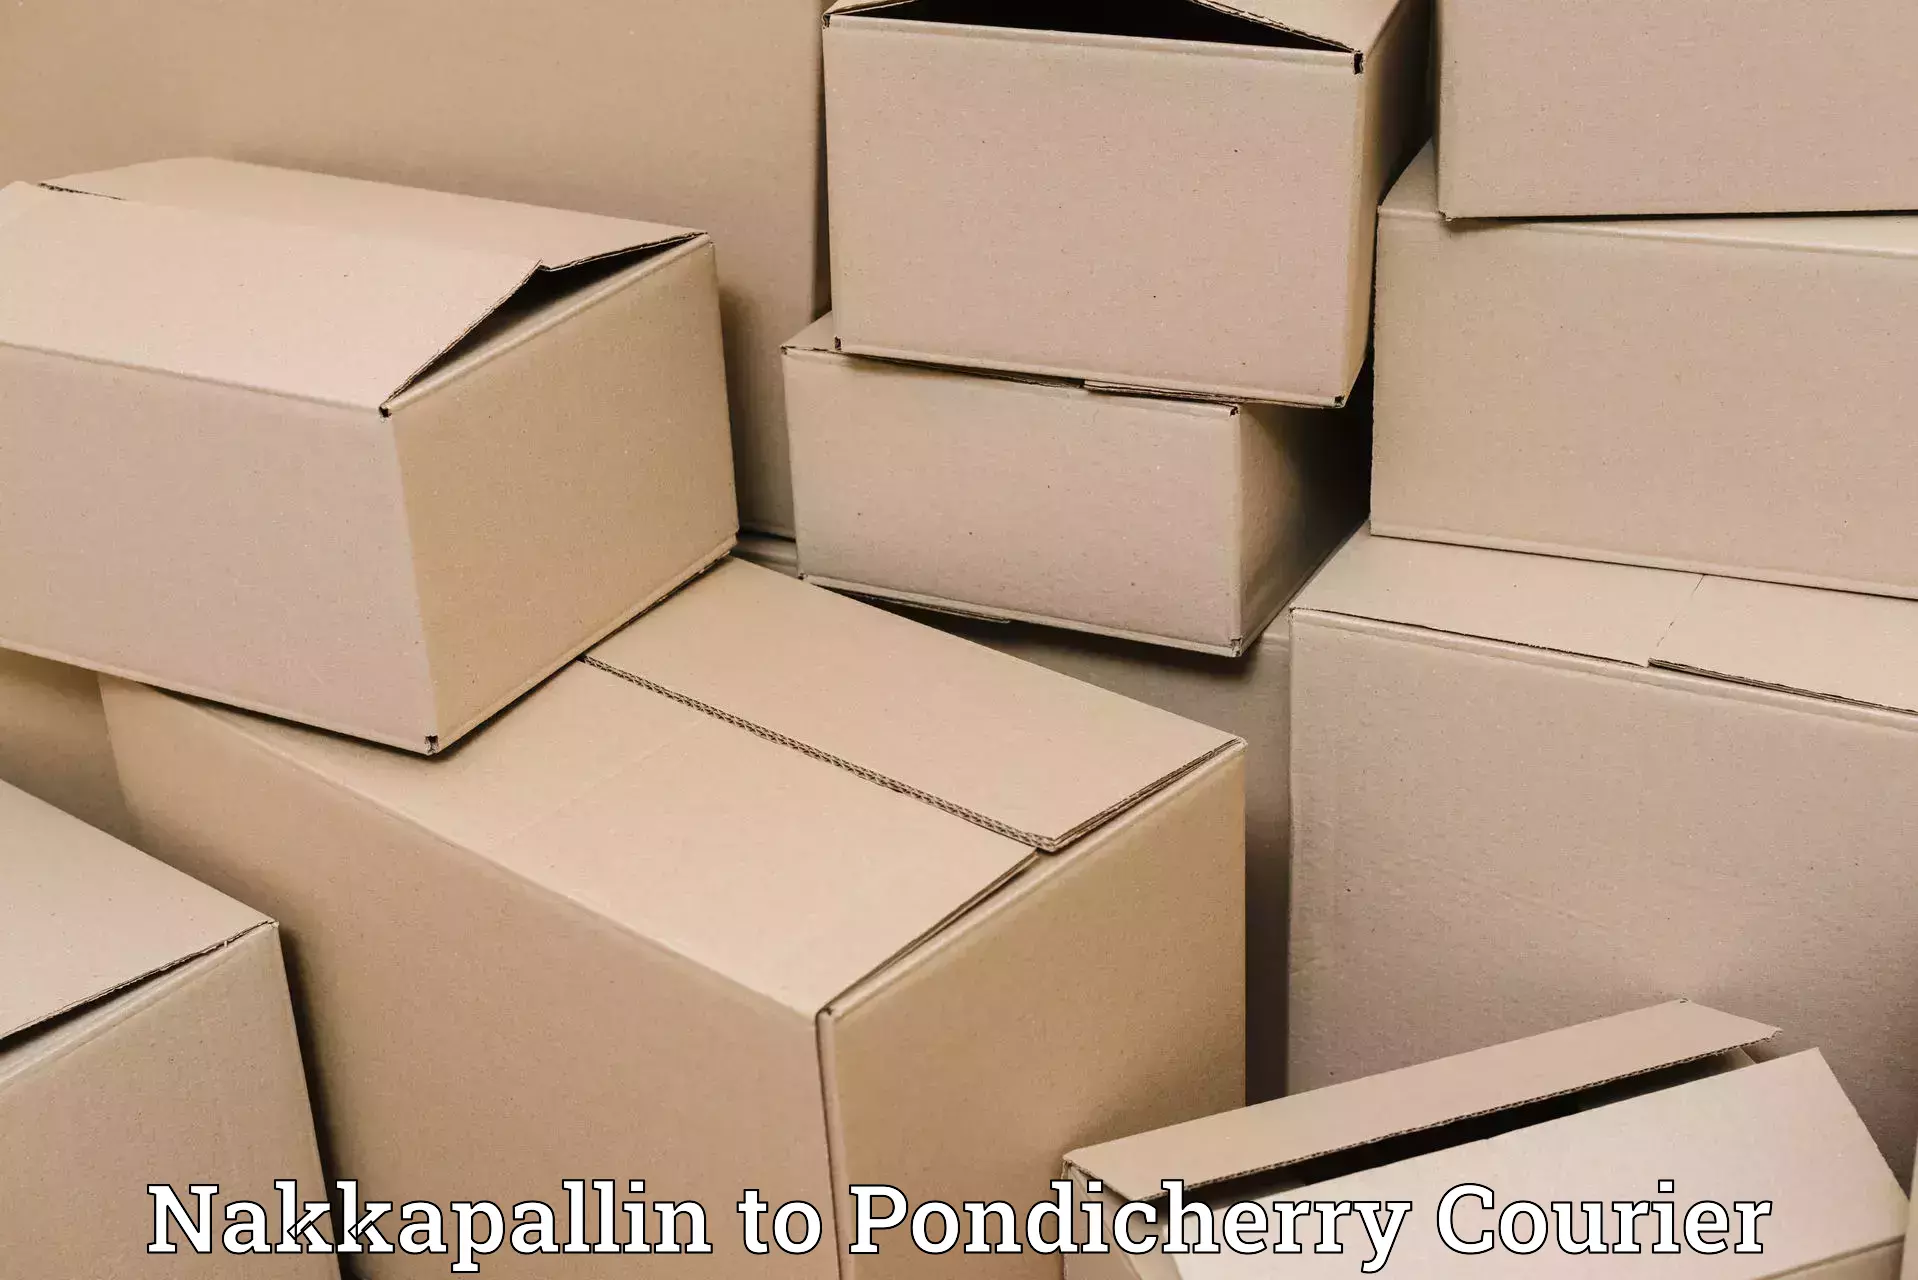 Express delivery network Nakkapallin to Pondicherry